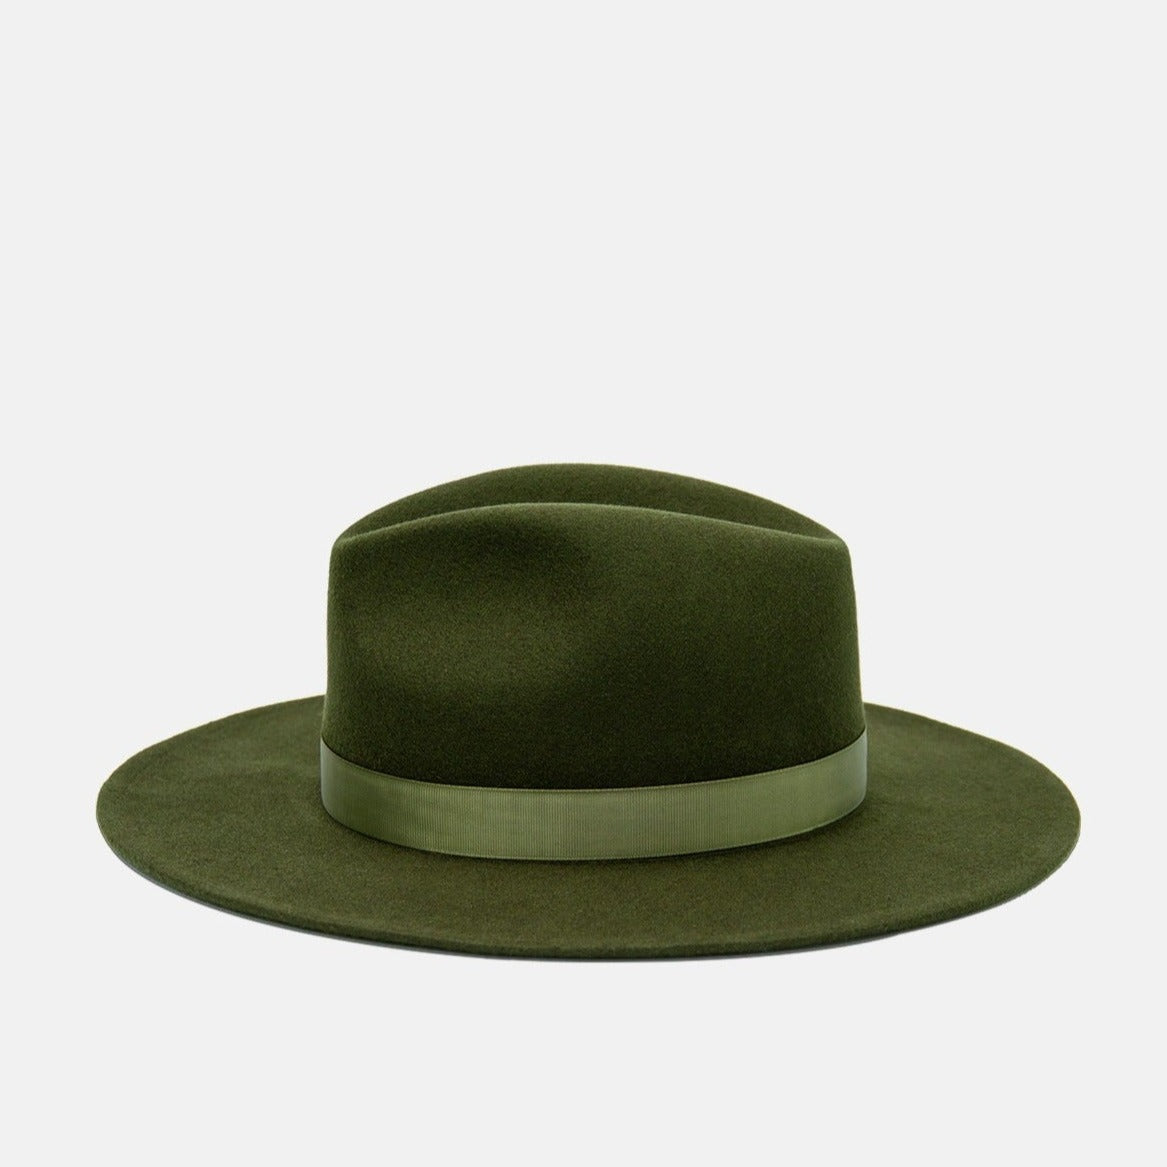 NTHIRTYTHREE - N33 - Fedora Felt Hat - Rancher Olive Green - handmade in Europe